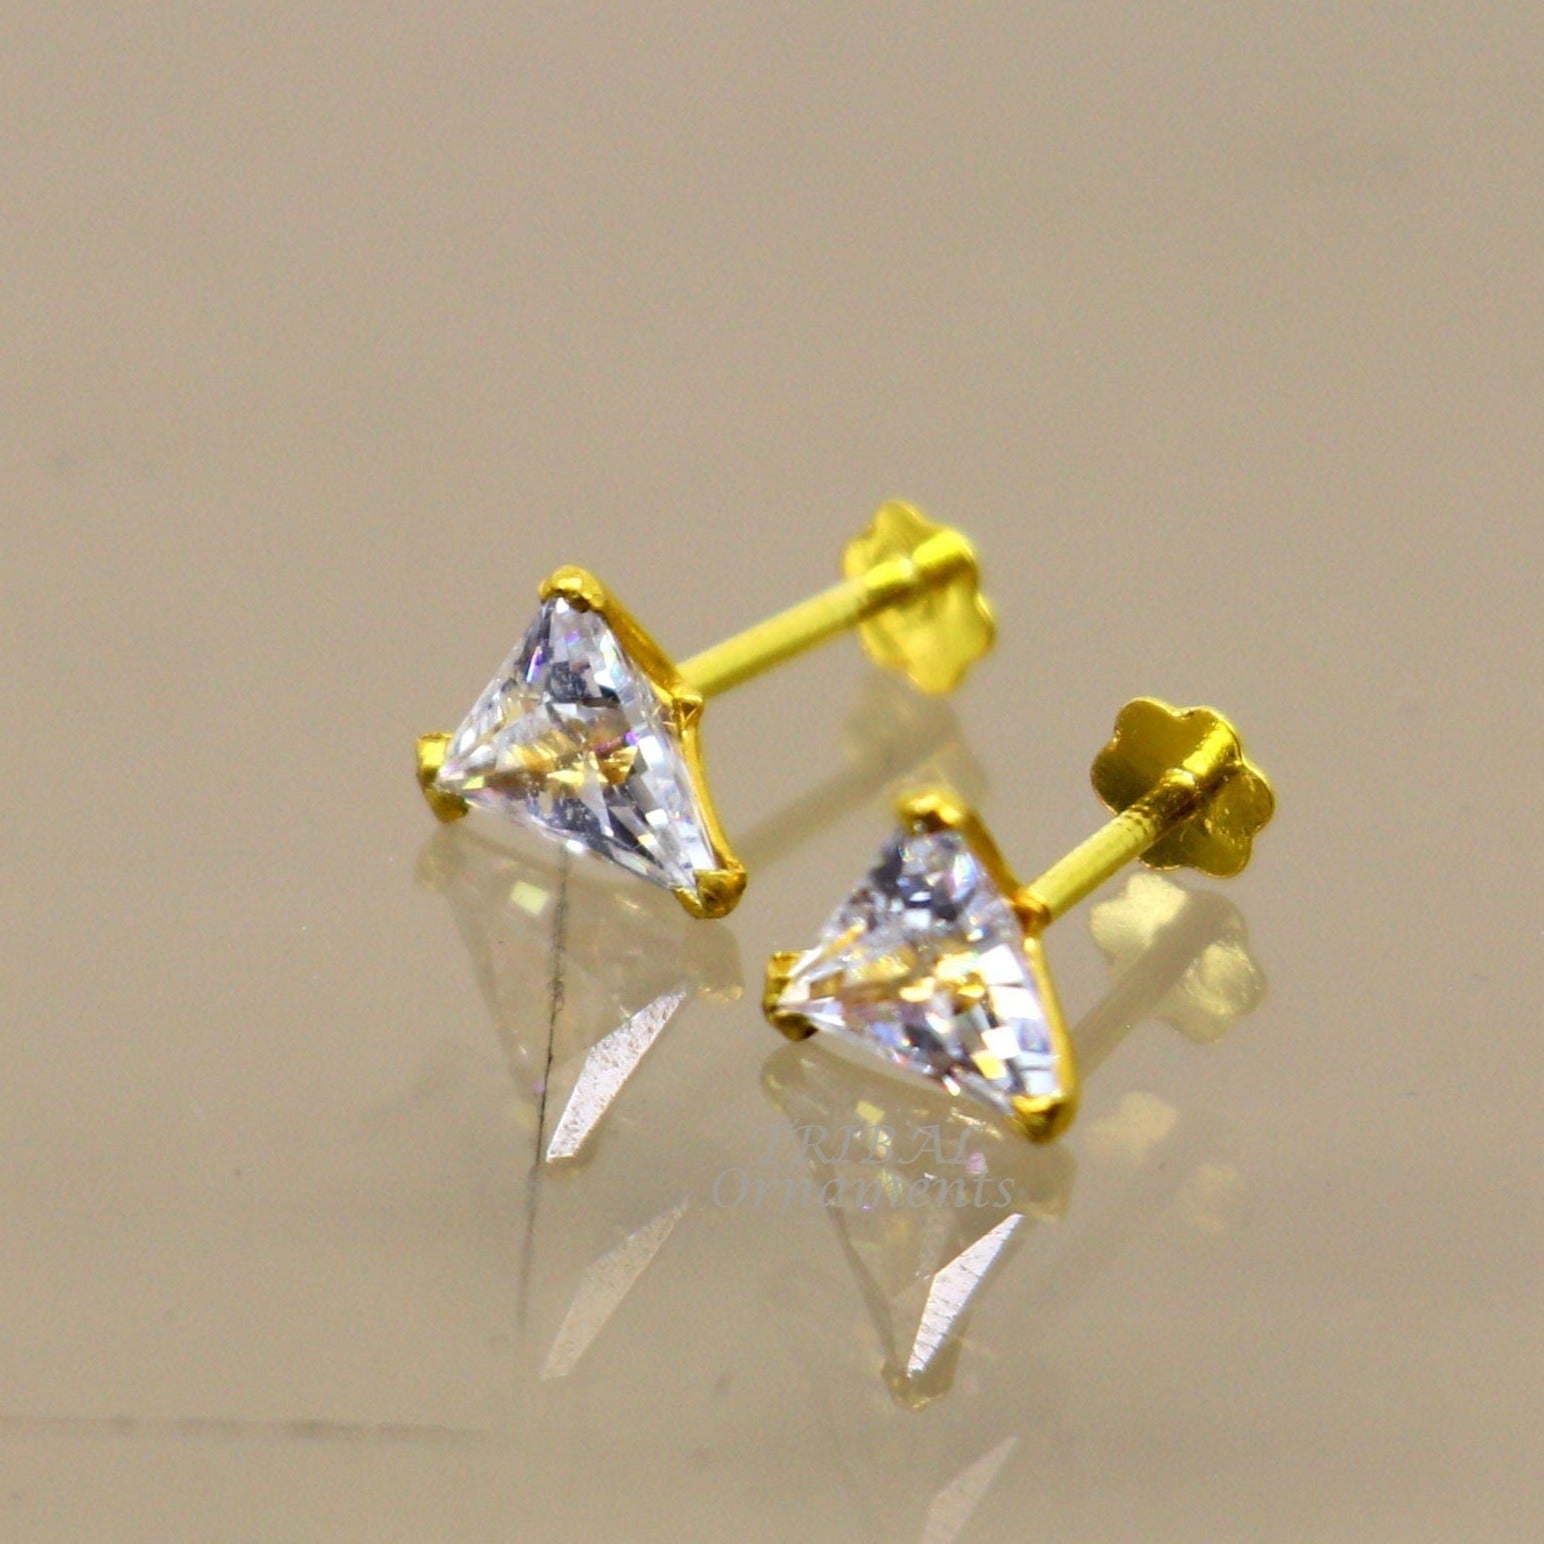 5mm 18kt yellow gold handmade single stone Triangle shape stud earring cartilage earring customized unisex screw back stud jewelry er148 - TRIBAL ORNAMENTS